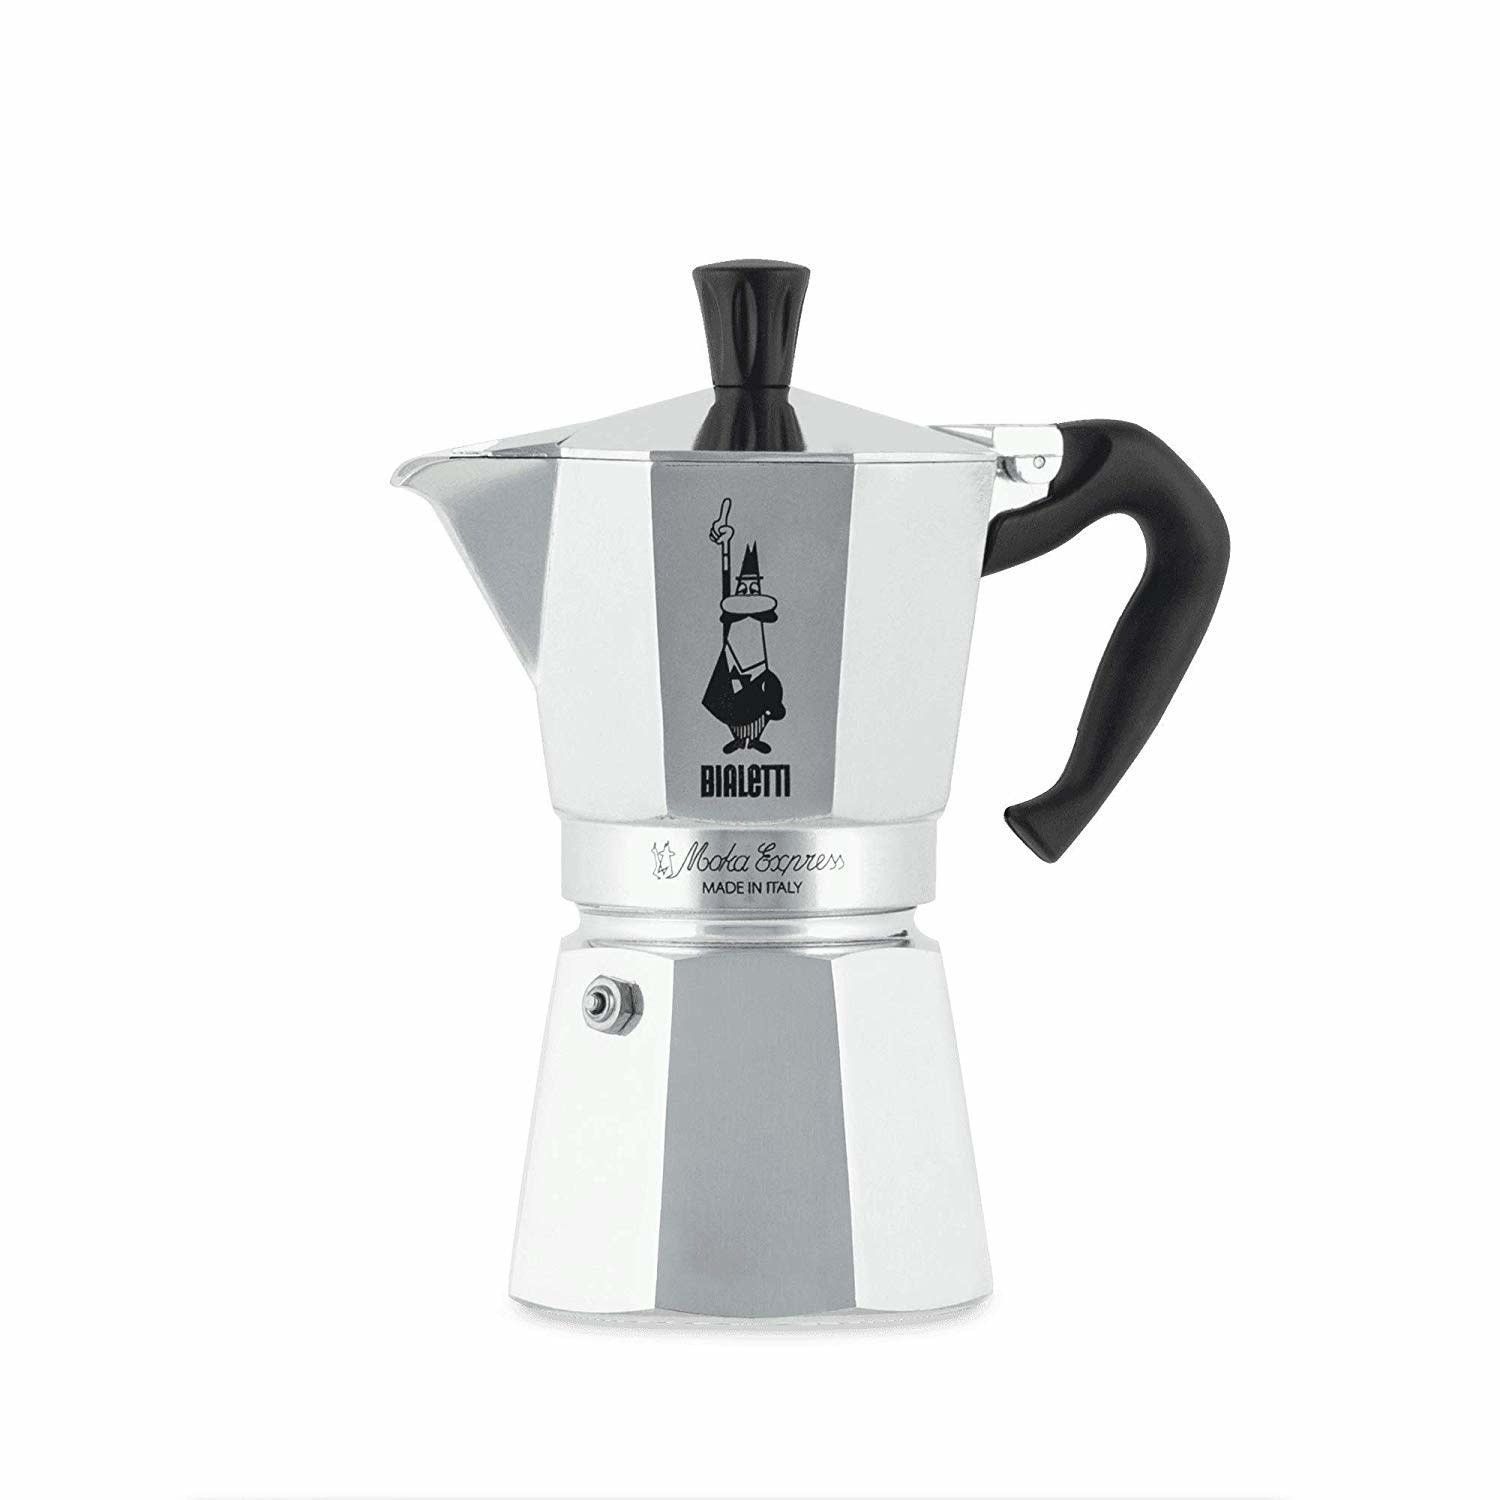 https://cdn.shoplightspeed.com/shops/633447/files/18301509/1500x4000x3/bialetti-moka-express-6-cup-espresso-maker.jpg